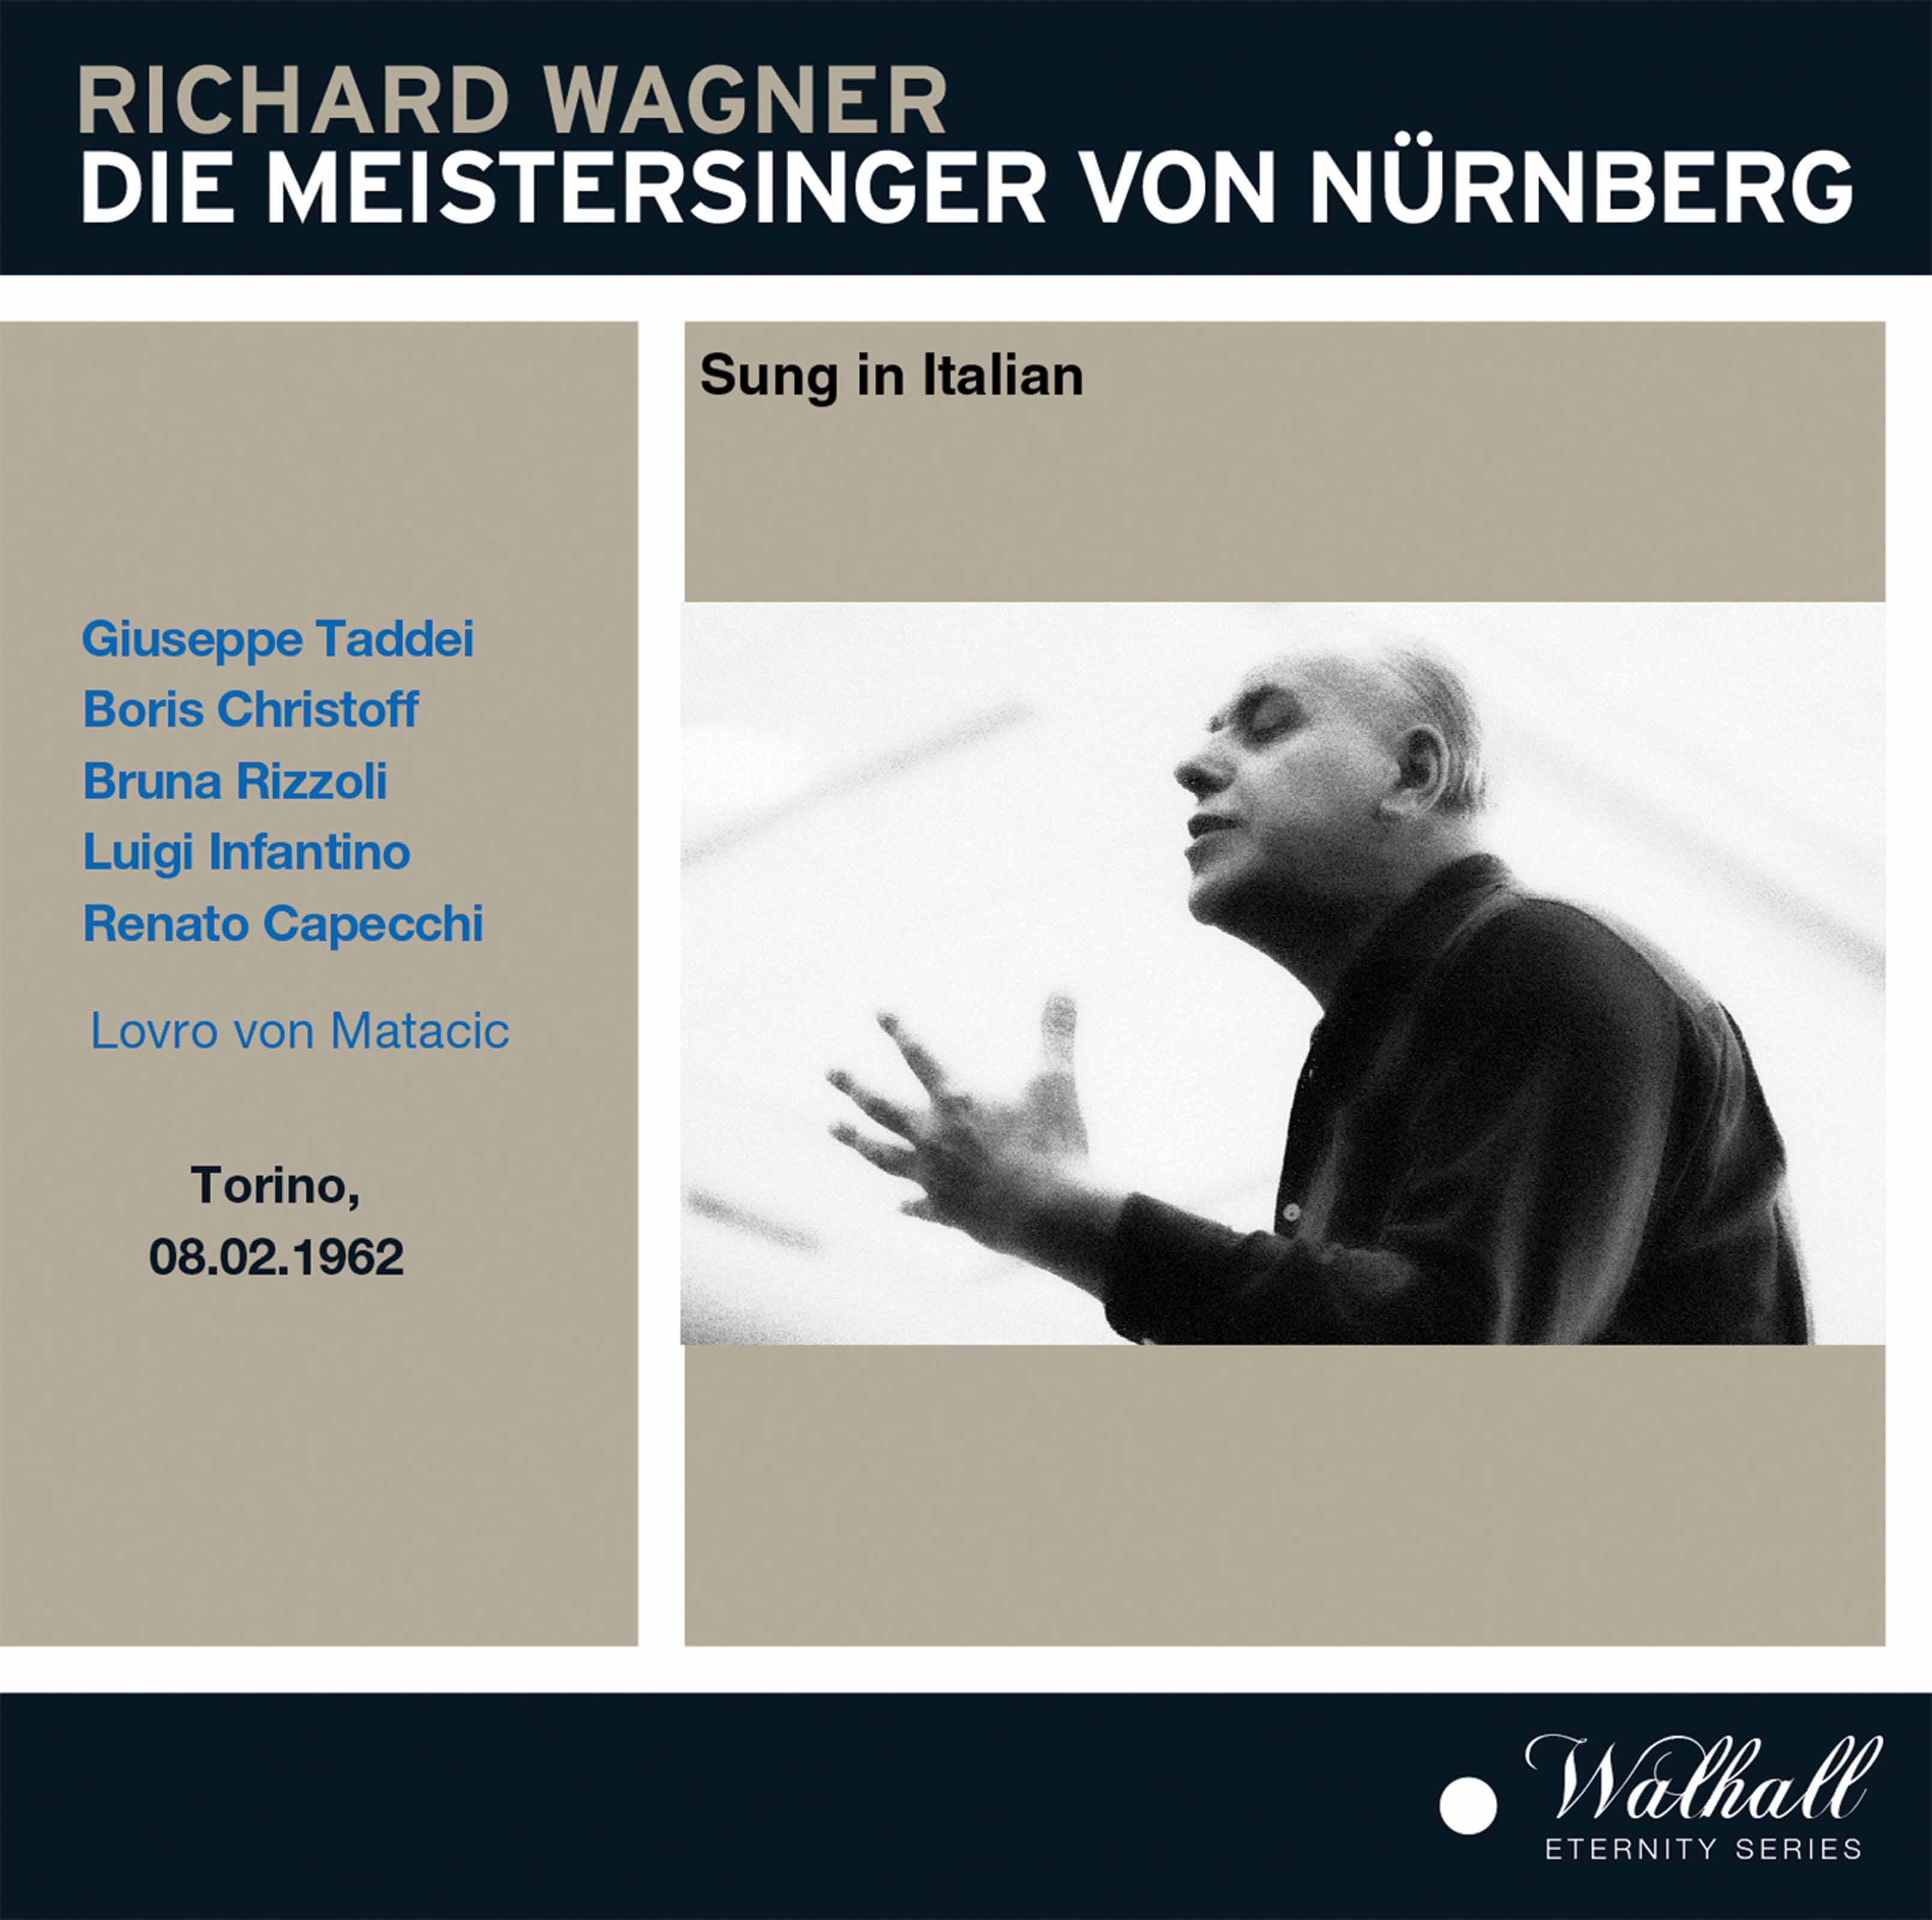 Orchestra Di Torino Della Rai - Die Meistersinger von Nürnberg:Seid ihr nun fertig? (Alt! Finito avete?)